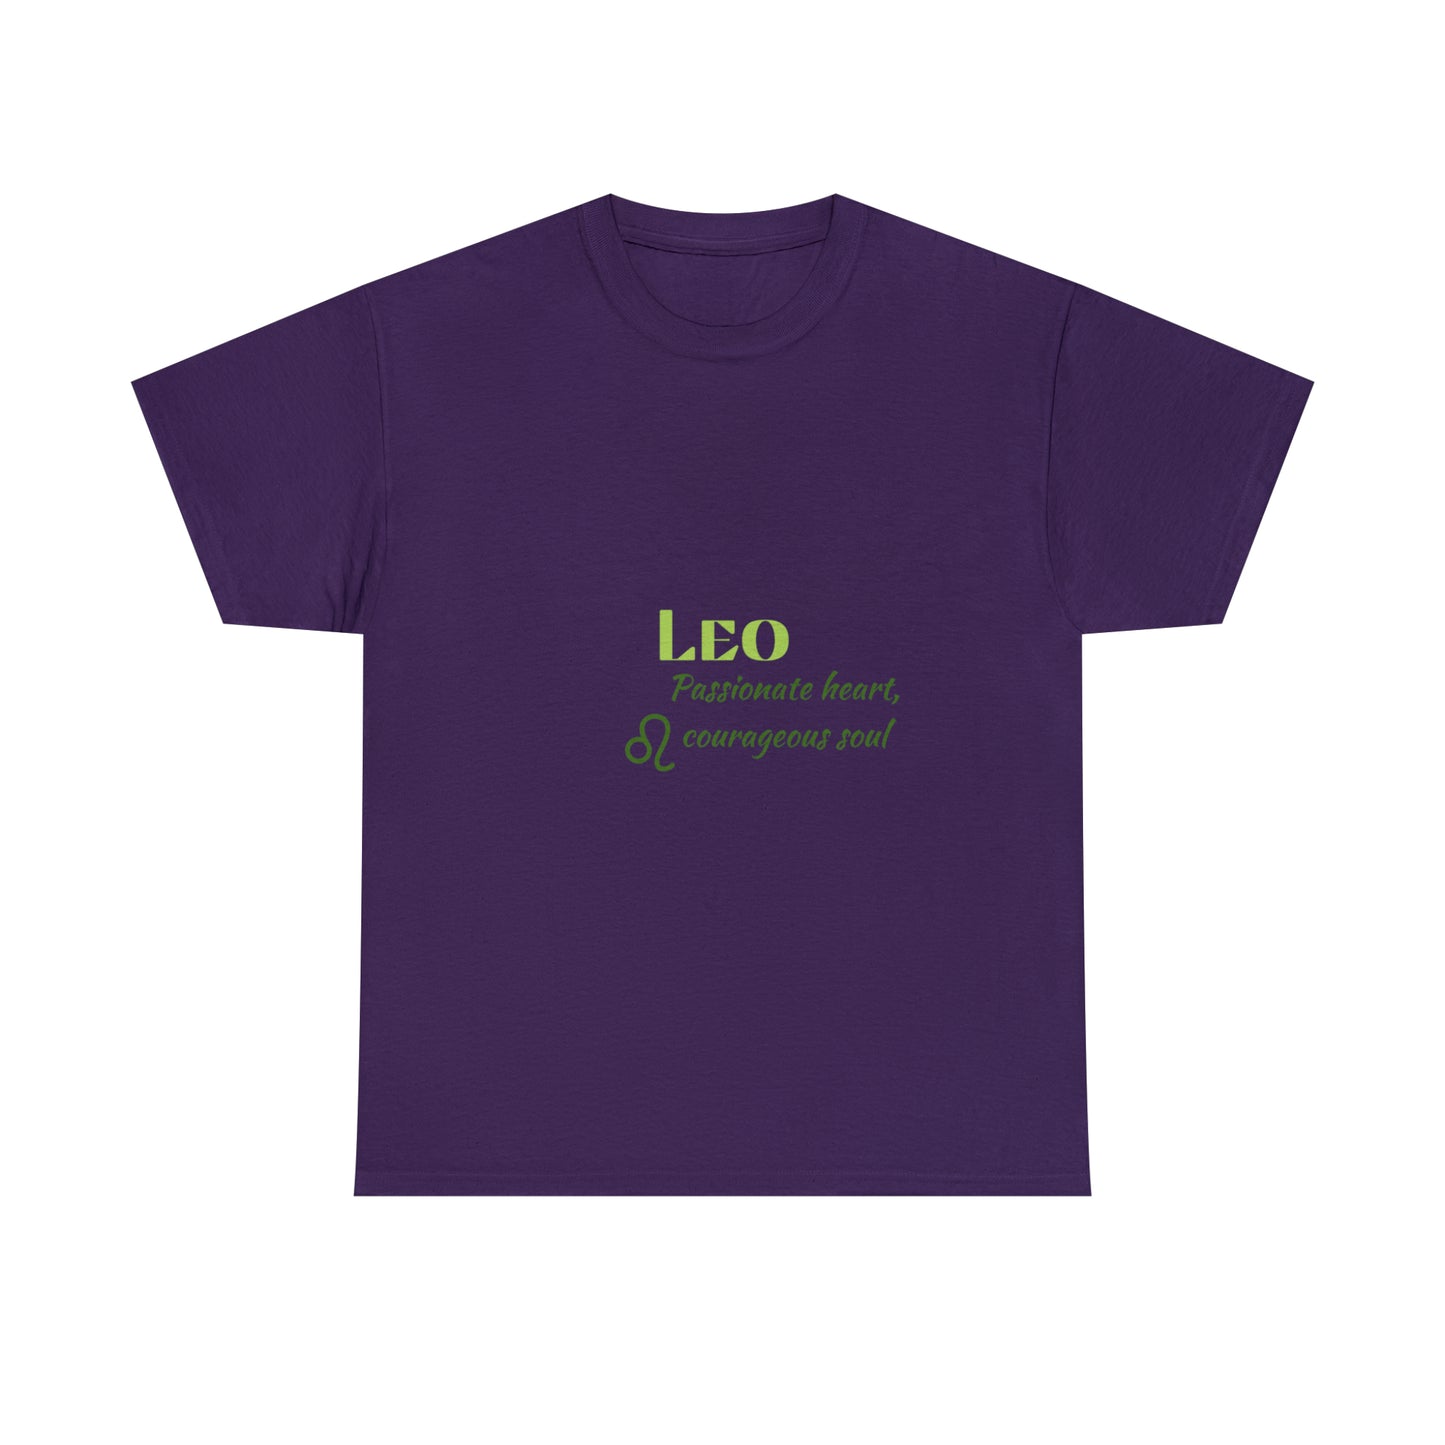 Leo T-shirt 2